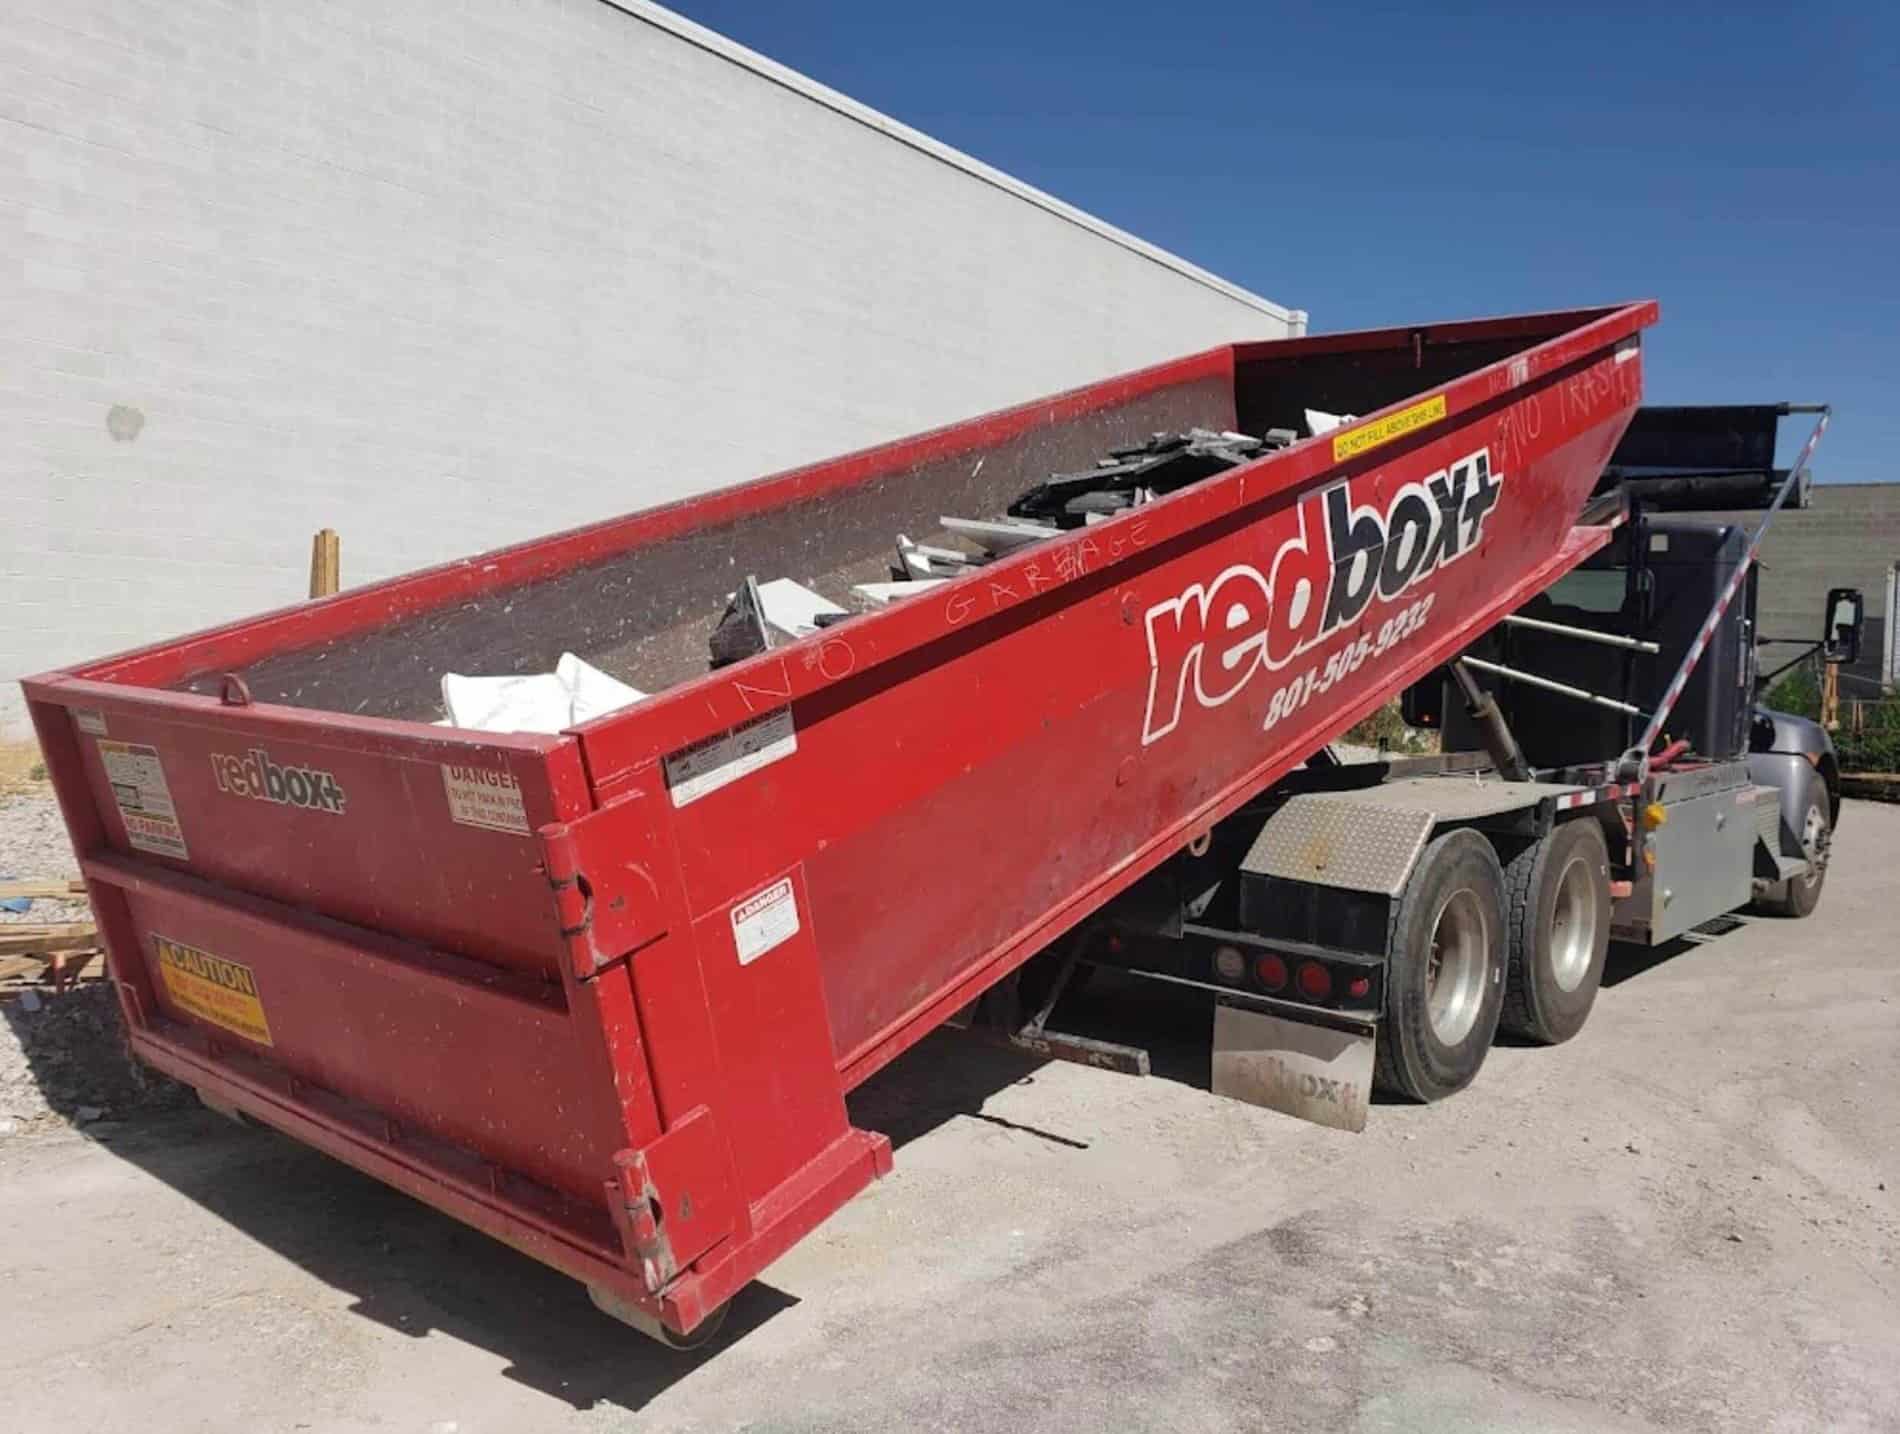 20 yard dumpster rental in salt lake city